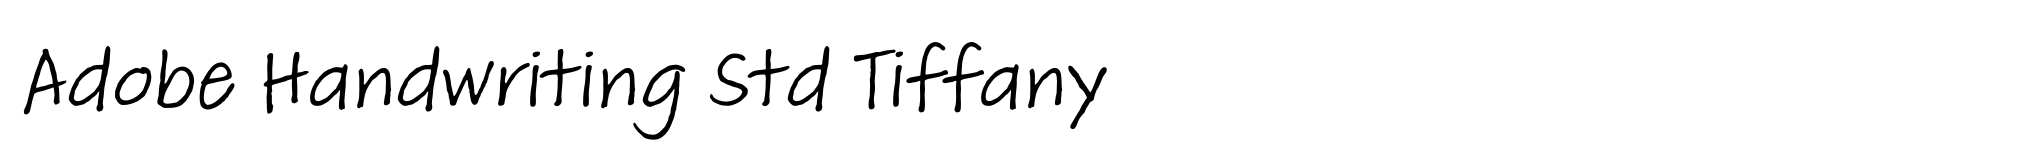 Adobe Handwriting Std Tiffany image